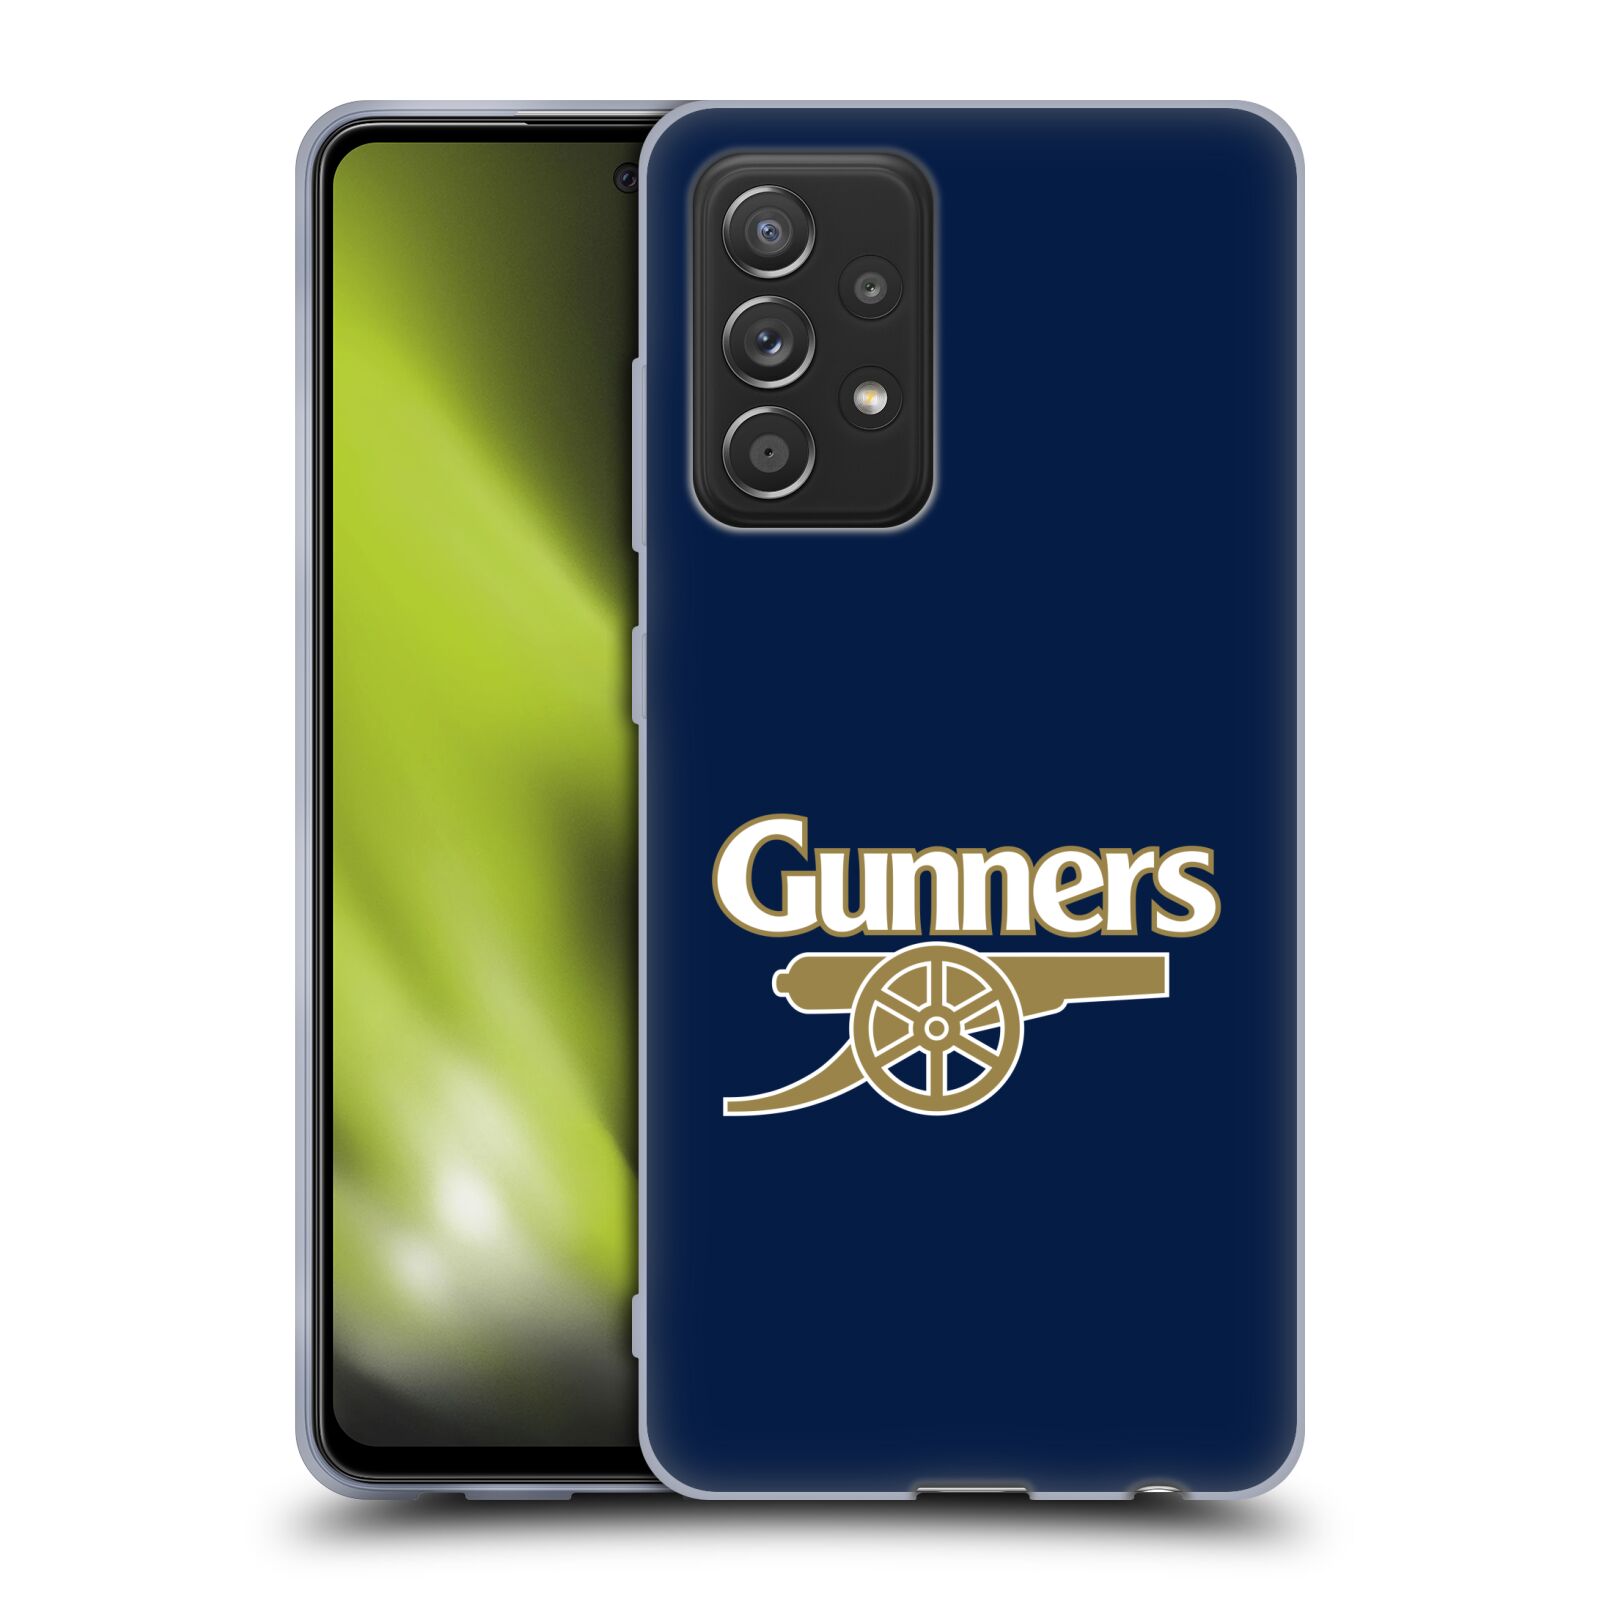 Silikonové pouzdro na mobil Samsung Galaxy A52 / A52 5G / A52s 5G - Head Case - Arsenal FC - Gunners (Silikonový kryt, obal, pouzdro na mobilní telefon s motivem klubu Arsenal FC - Gunners pro Samsung Galaxy A52 / A52 5G / A52s 5G)